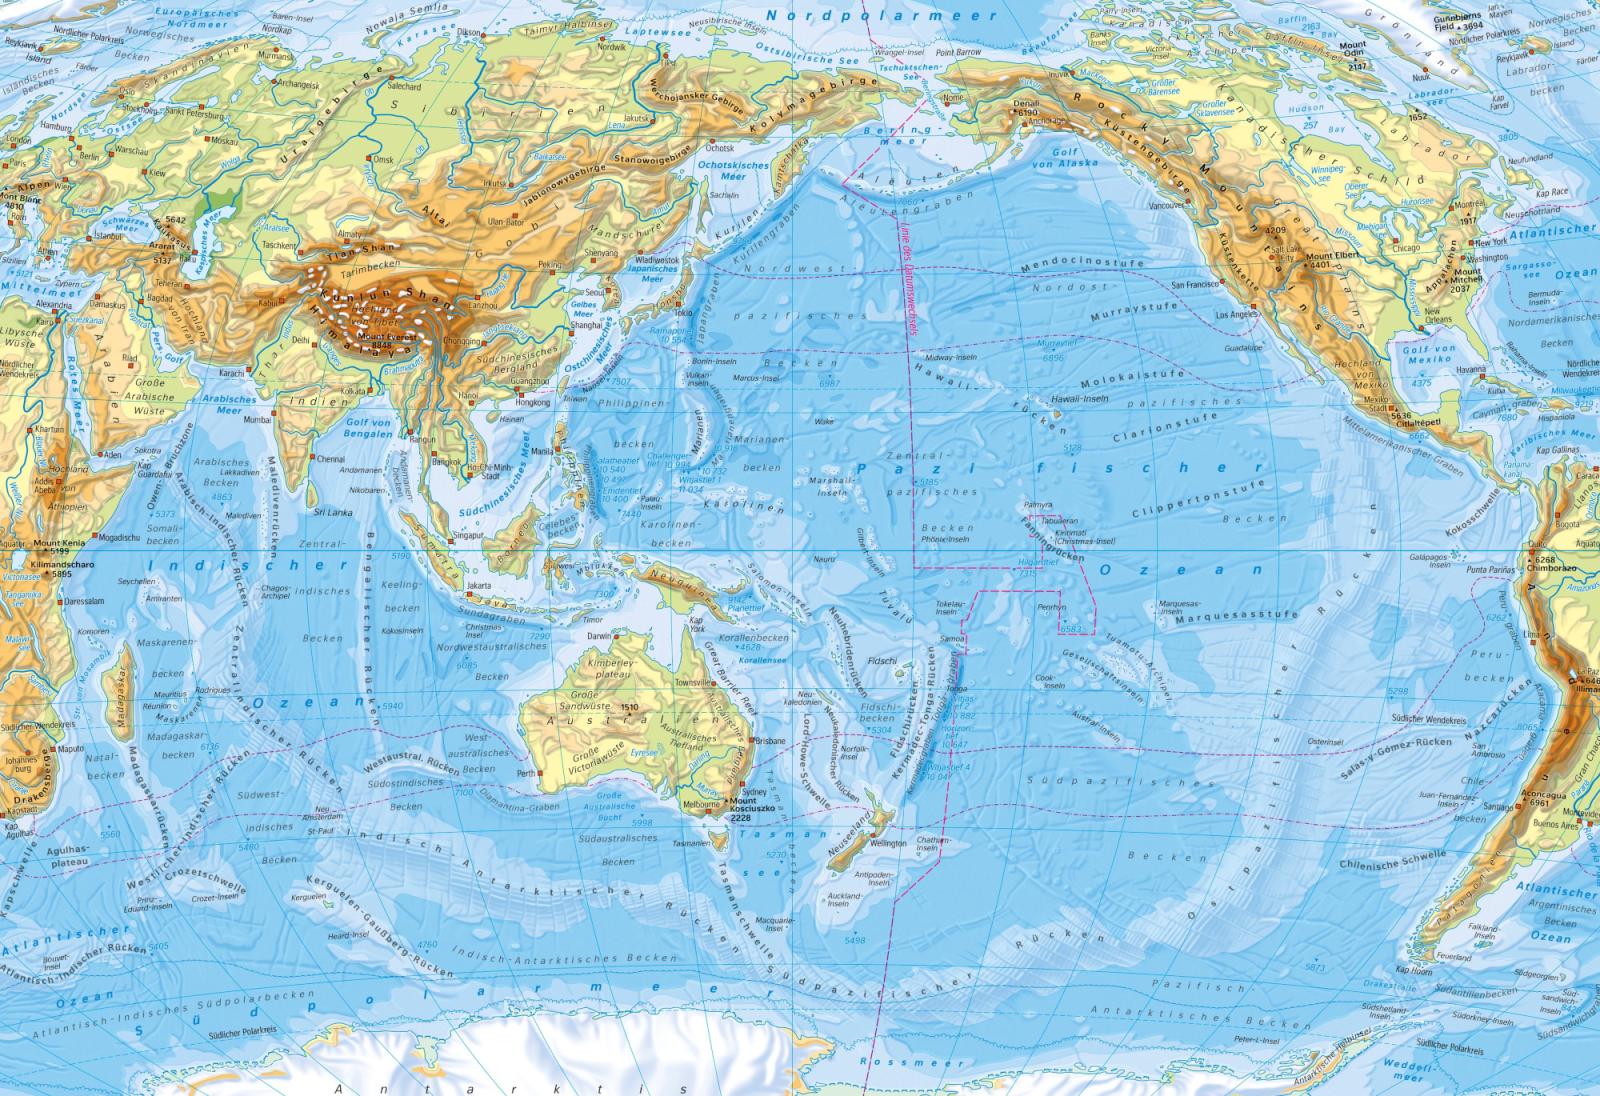 Основные острова тихого океана. Тихий океан на карте. Острова Тихого океана на карте. Т̊и̊х̊и̊й̊ о̊к̊е̊а̊н̊ н̊а̊ к̊а̊р̊р̊ т̊т̊е̊. Карта Тихого океана географическая.